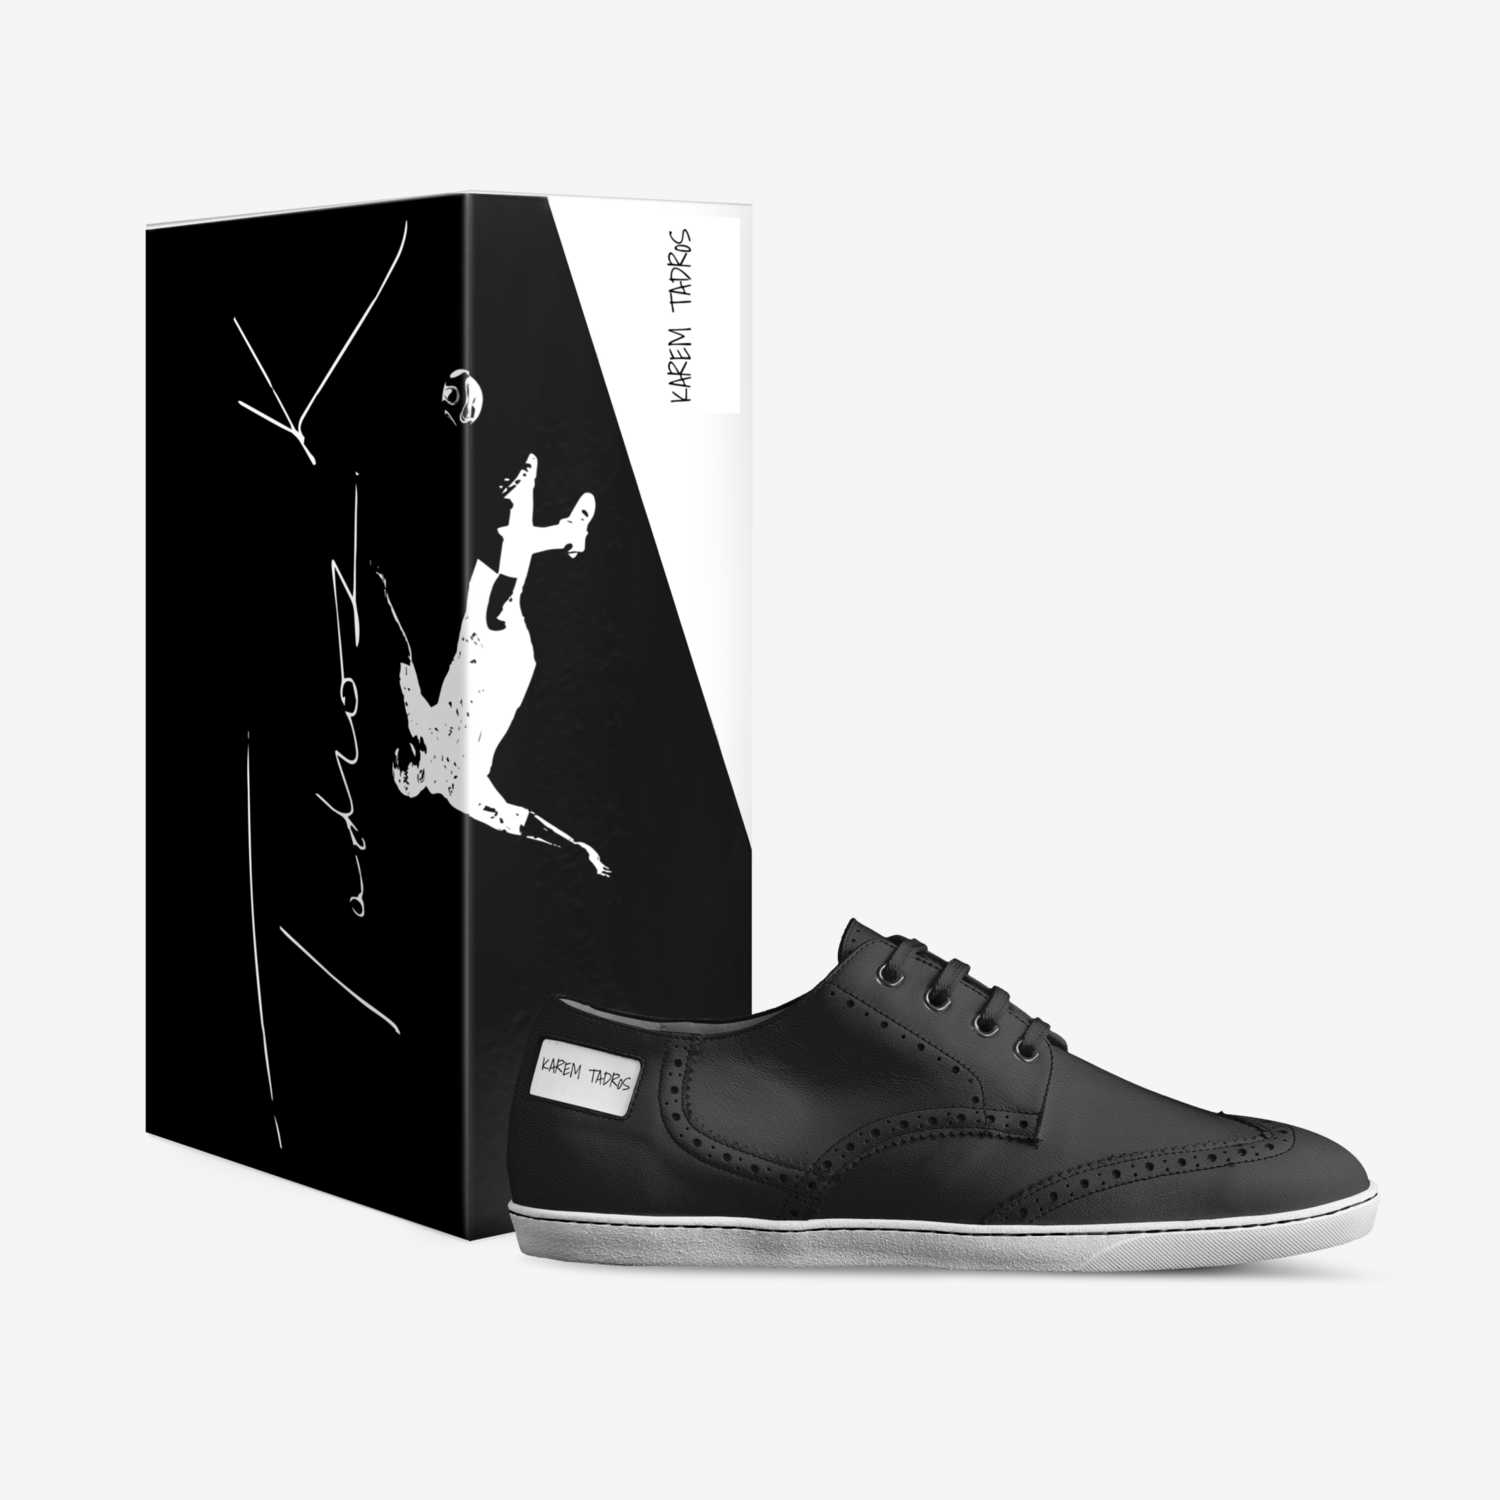 Karem Tadros custom made in Italy shoes by Karem Tadros | Box view